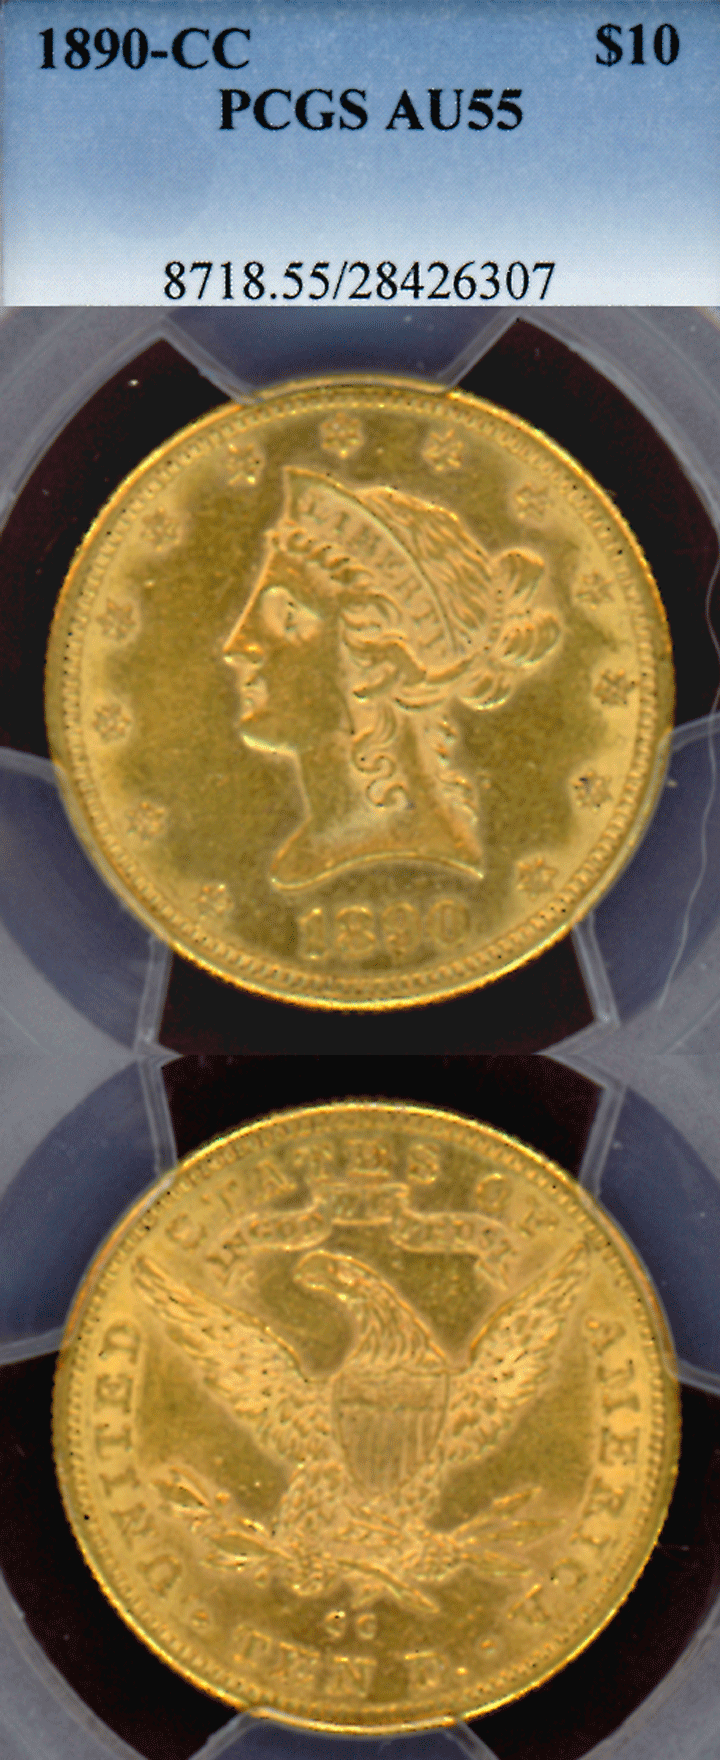 1890-CC $10.00 US gold eagle PCGS AU 55